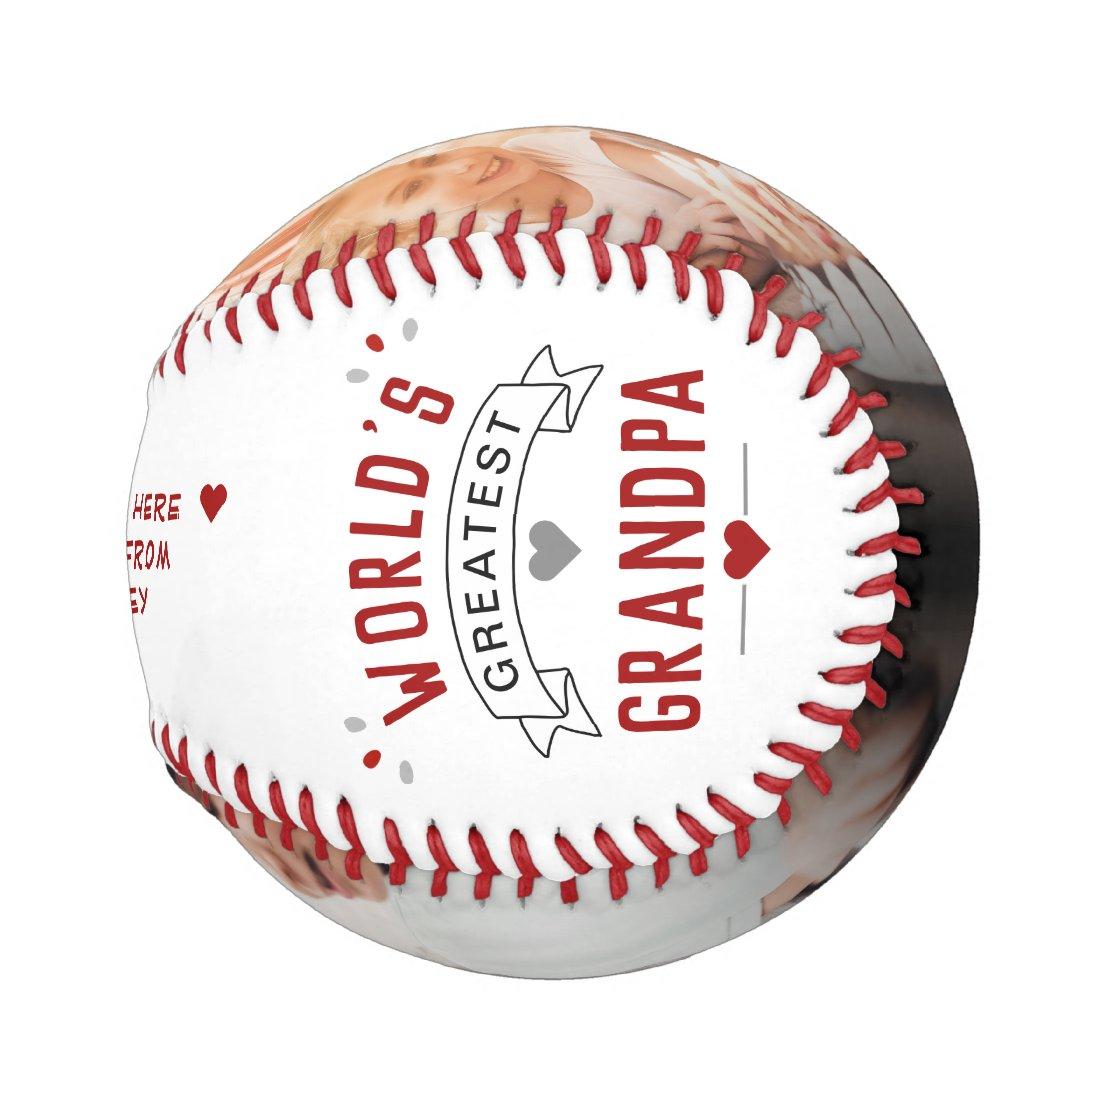 Birthday Gifts for Your Family - Custom Baseball And Softball